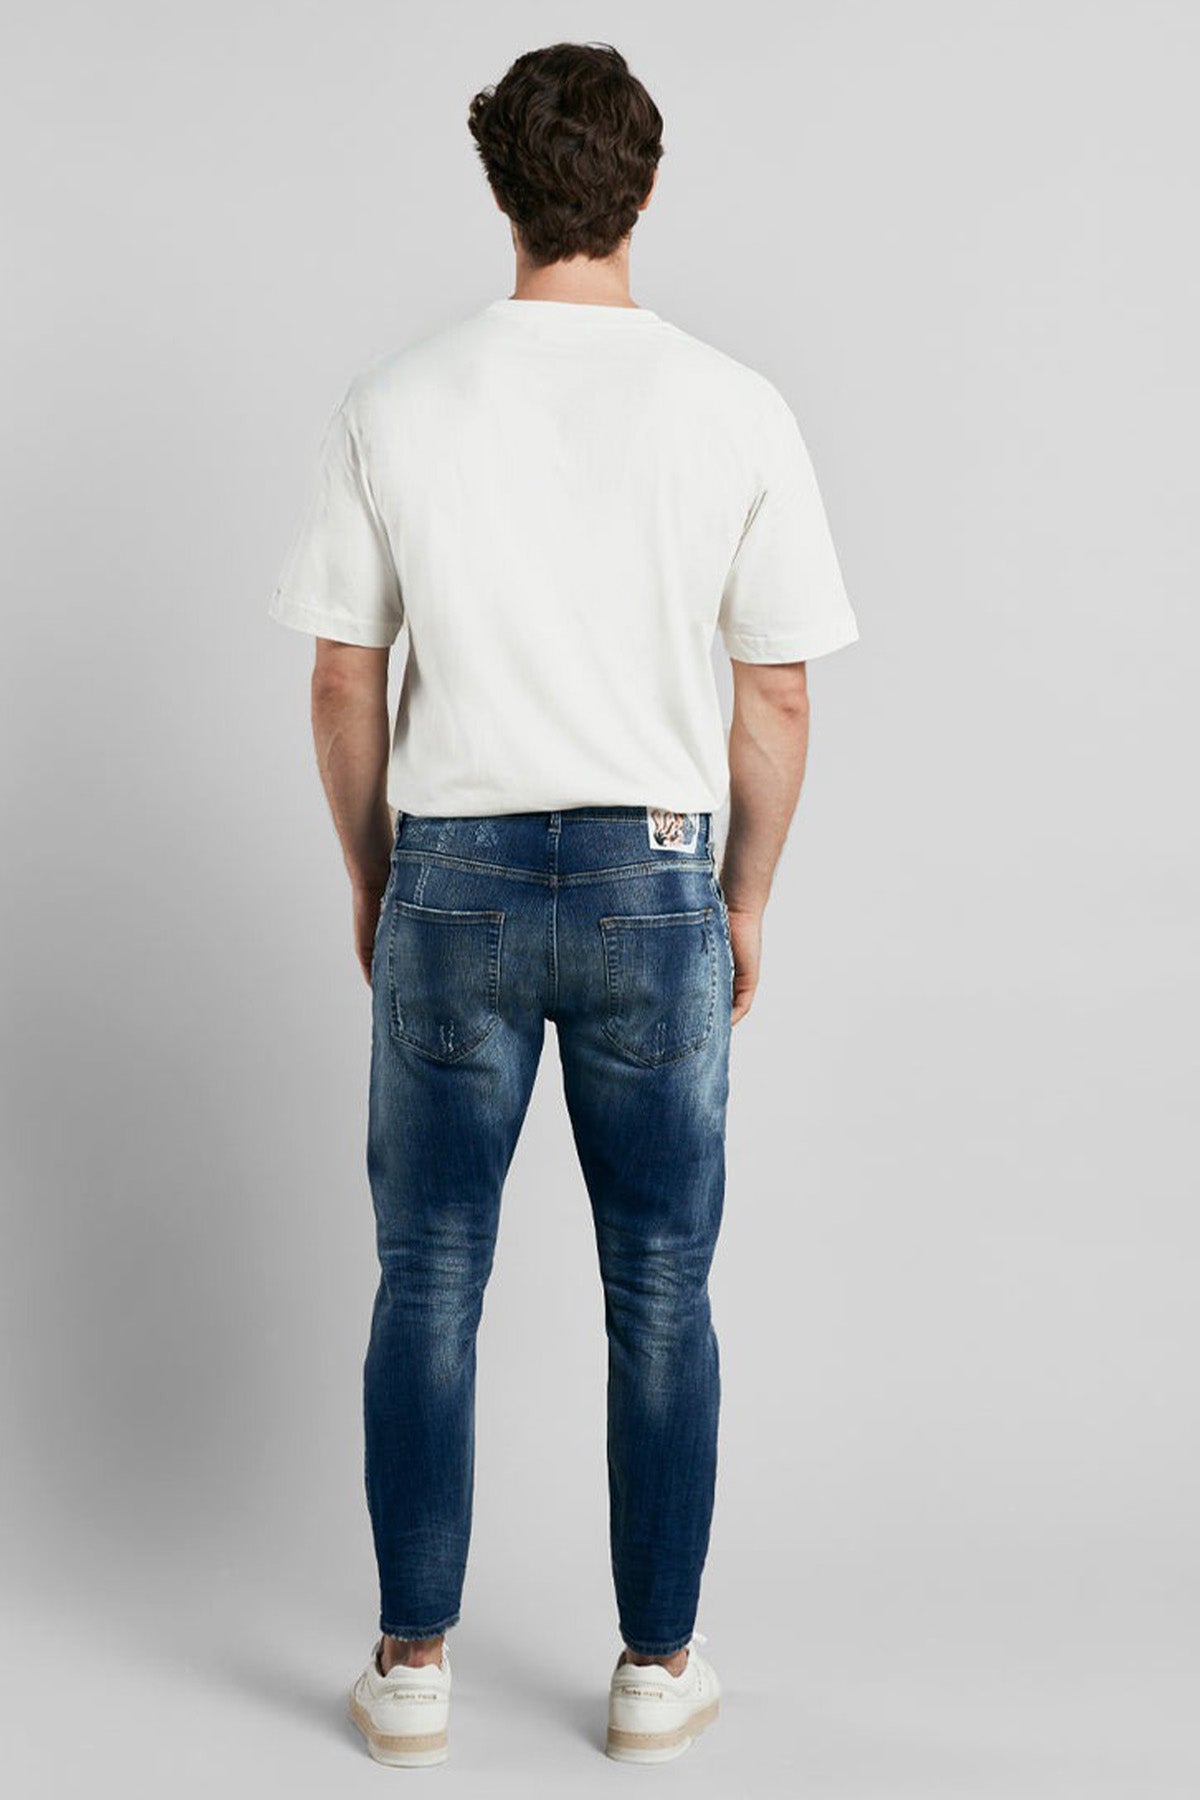 Goldgarn Neckarau Twisted Cropped Fit Jeans